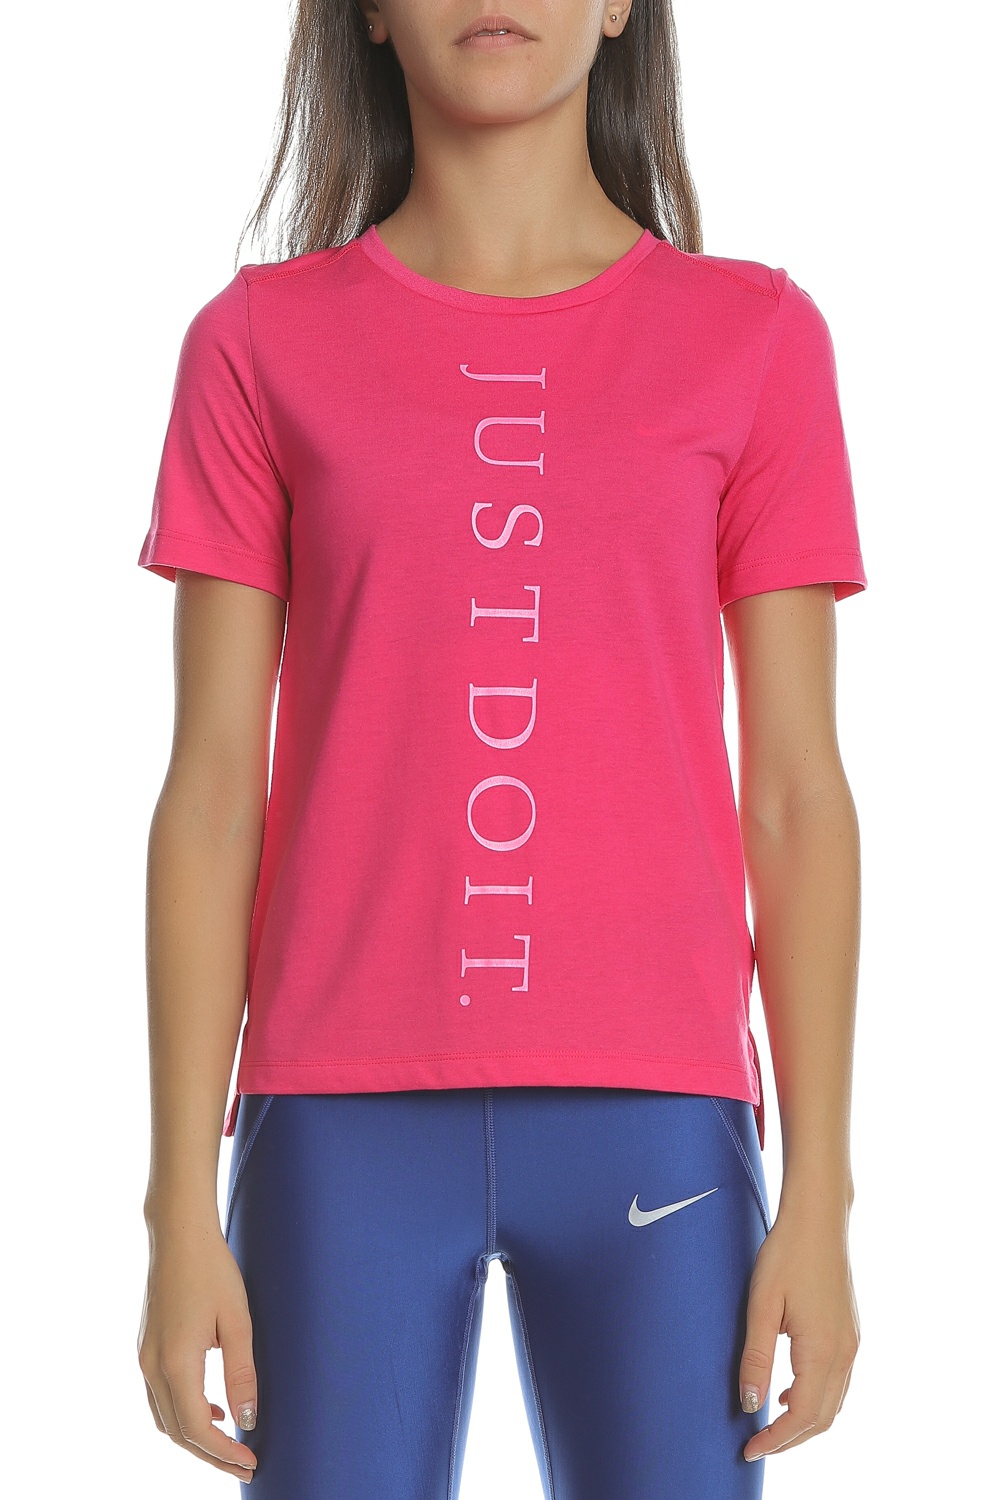 NIKE - Γυναικεία κοντομάνικη μπλούζα NIKE MILER TOP SS JDI φούξια Γυναικεία/Ρούχα/Αθλητικά/T-shirt-Τοπ